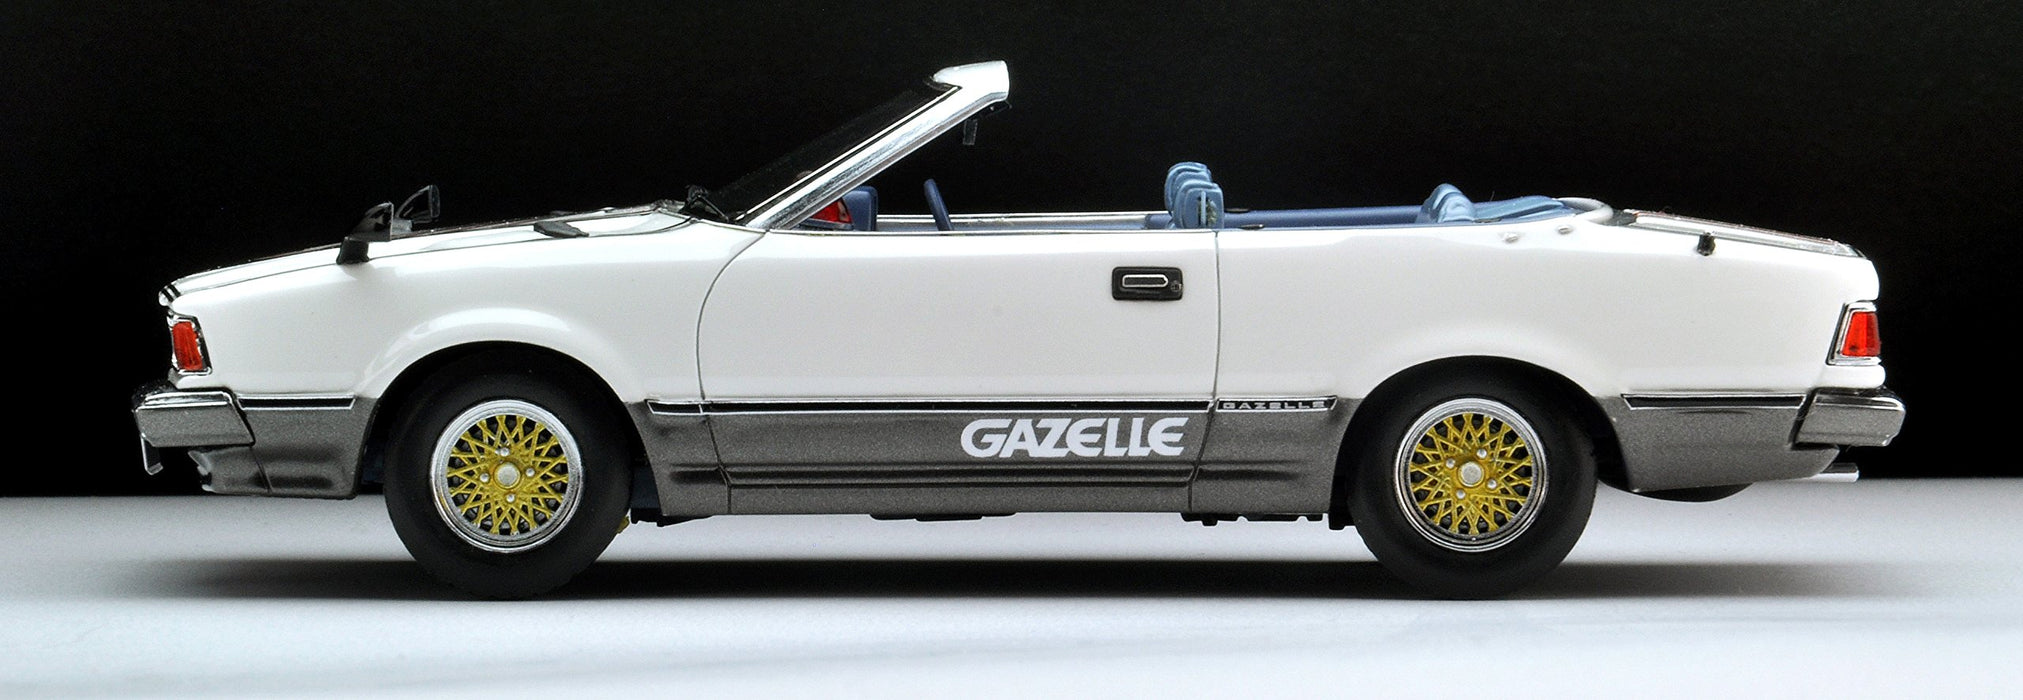 Tomytec modèle d'allumage Western Police Gazelle 1/43 échelle produit fini